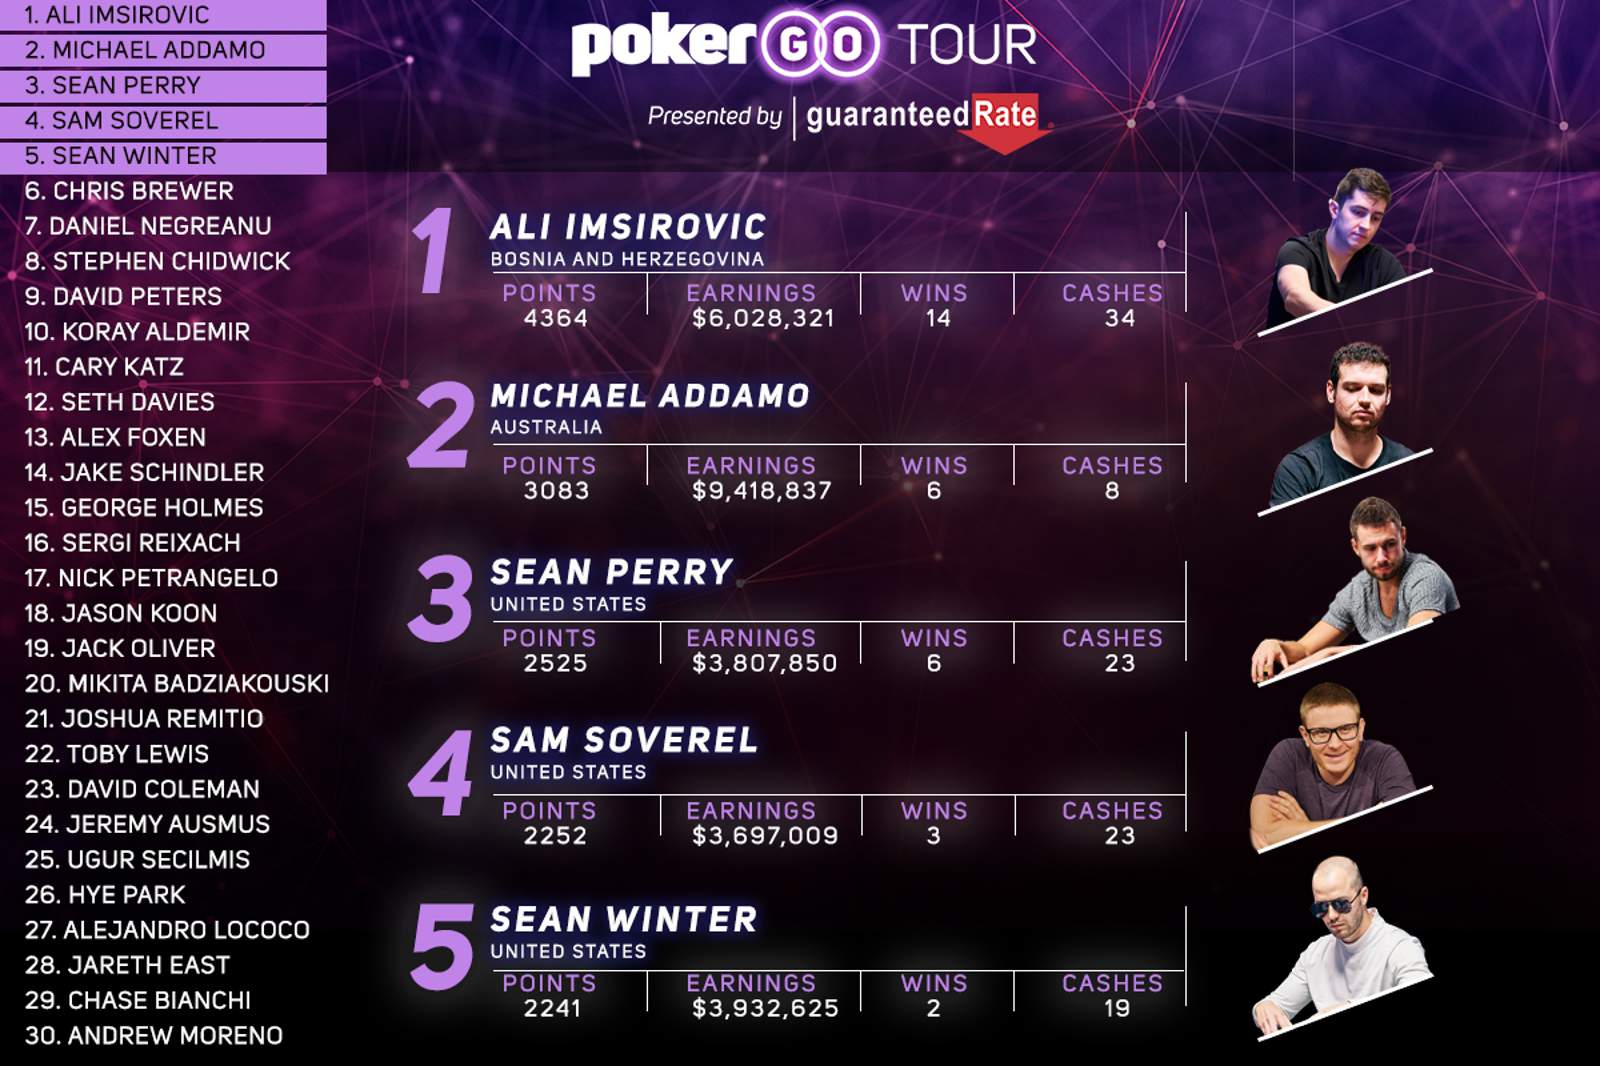 Ali Imsirovic Wins 14th PokerGO Tour Title to Extend Lead Over Michael Addamo